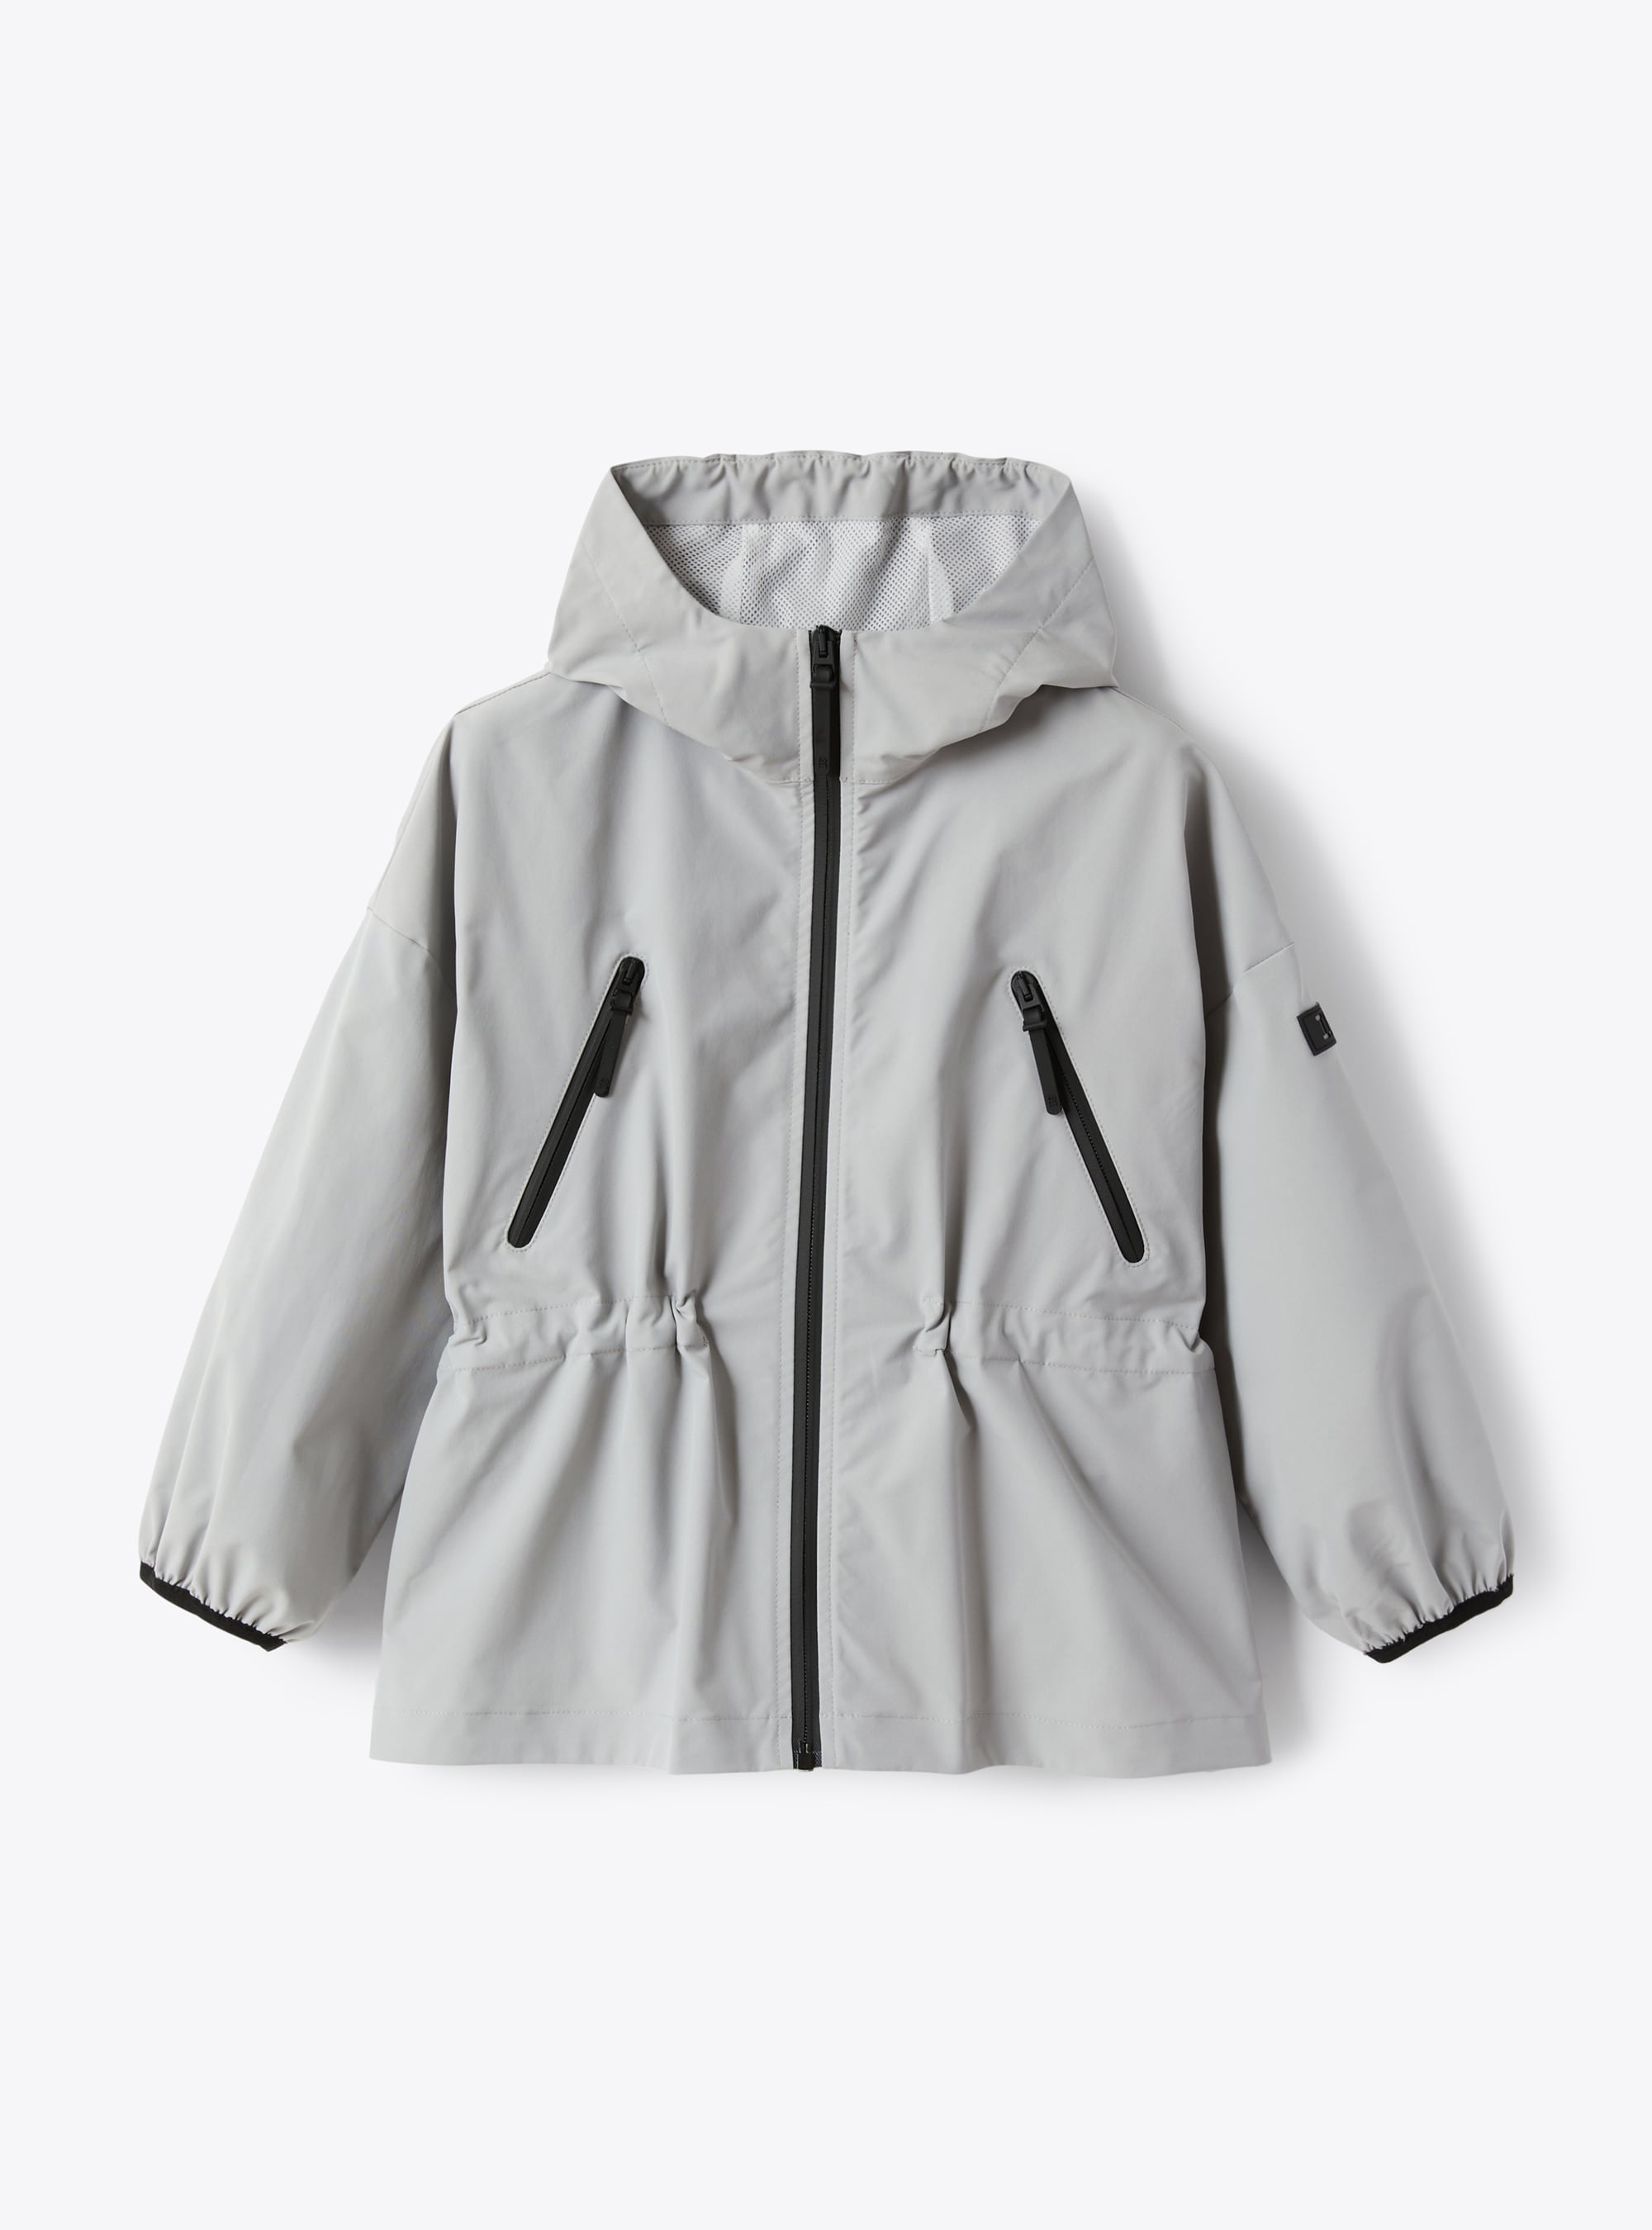 Zip-front jacket in hi-tech fabric - Jackets - Il Gufo